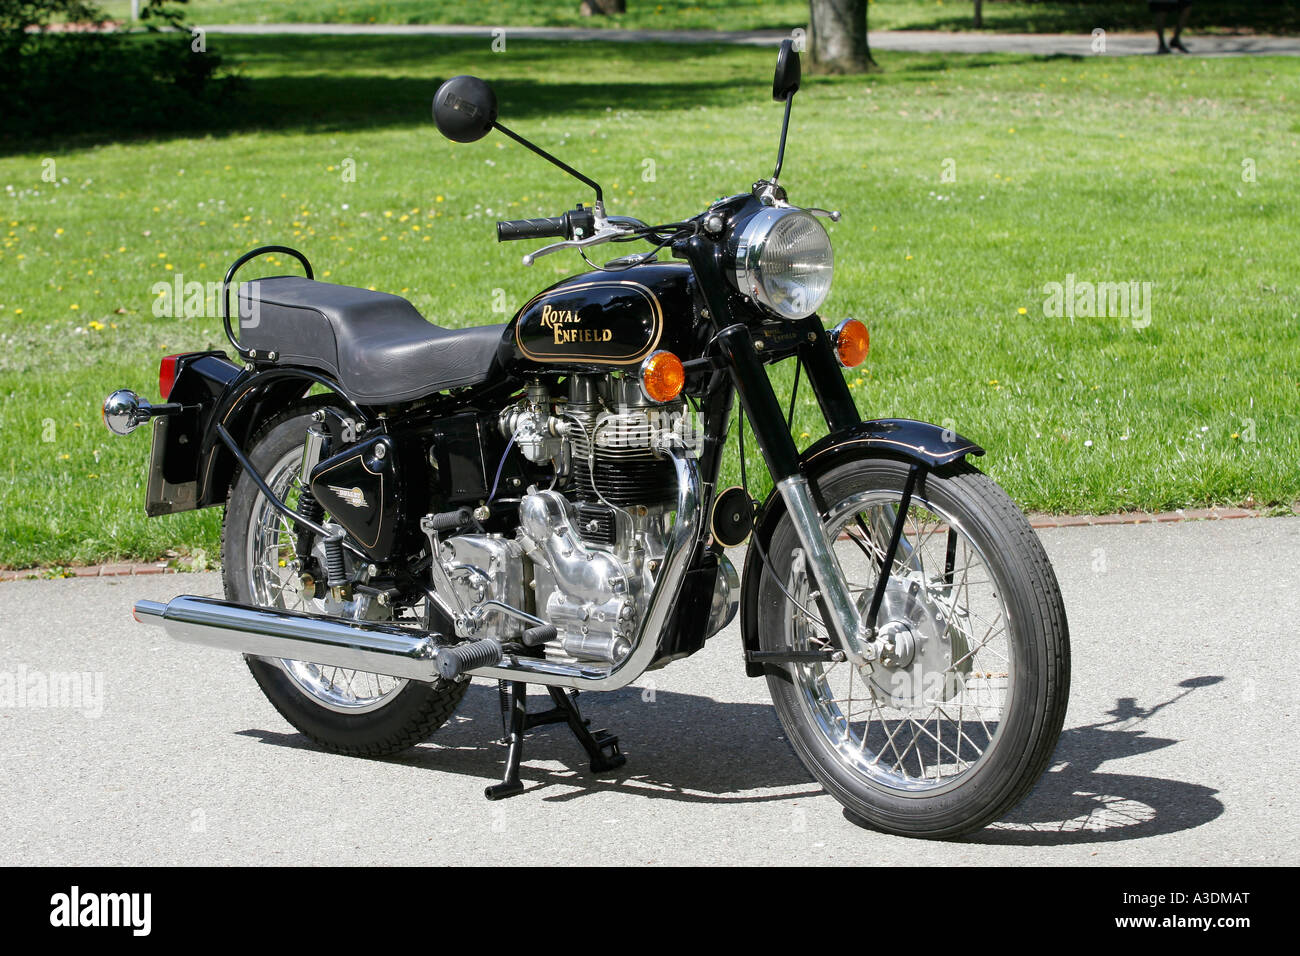 Royal Enfield Bullet 500 motociclo Foto Stock